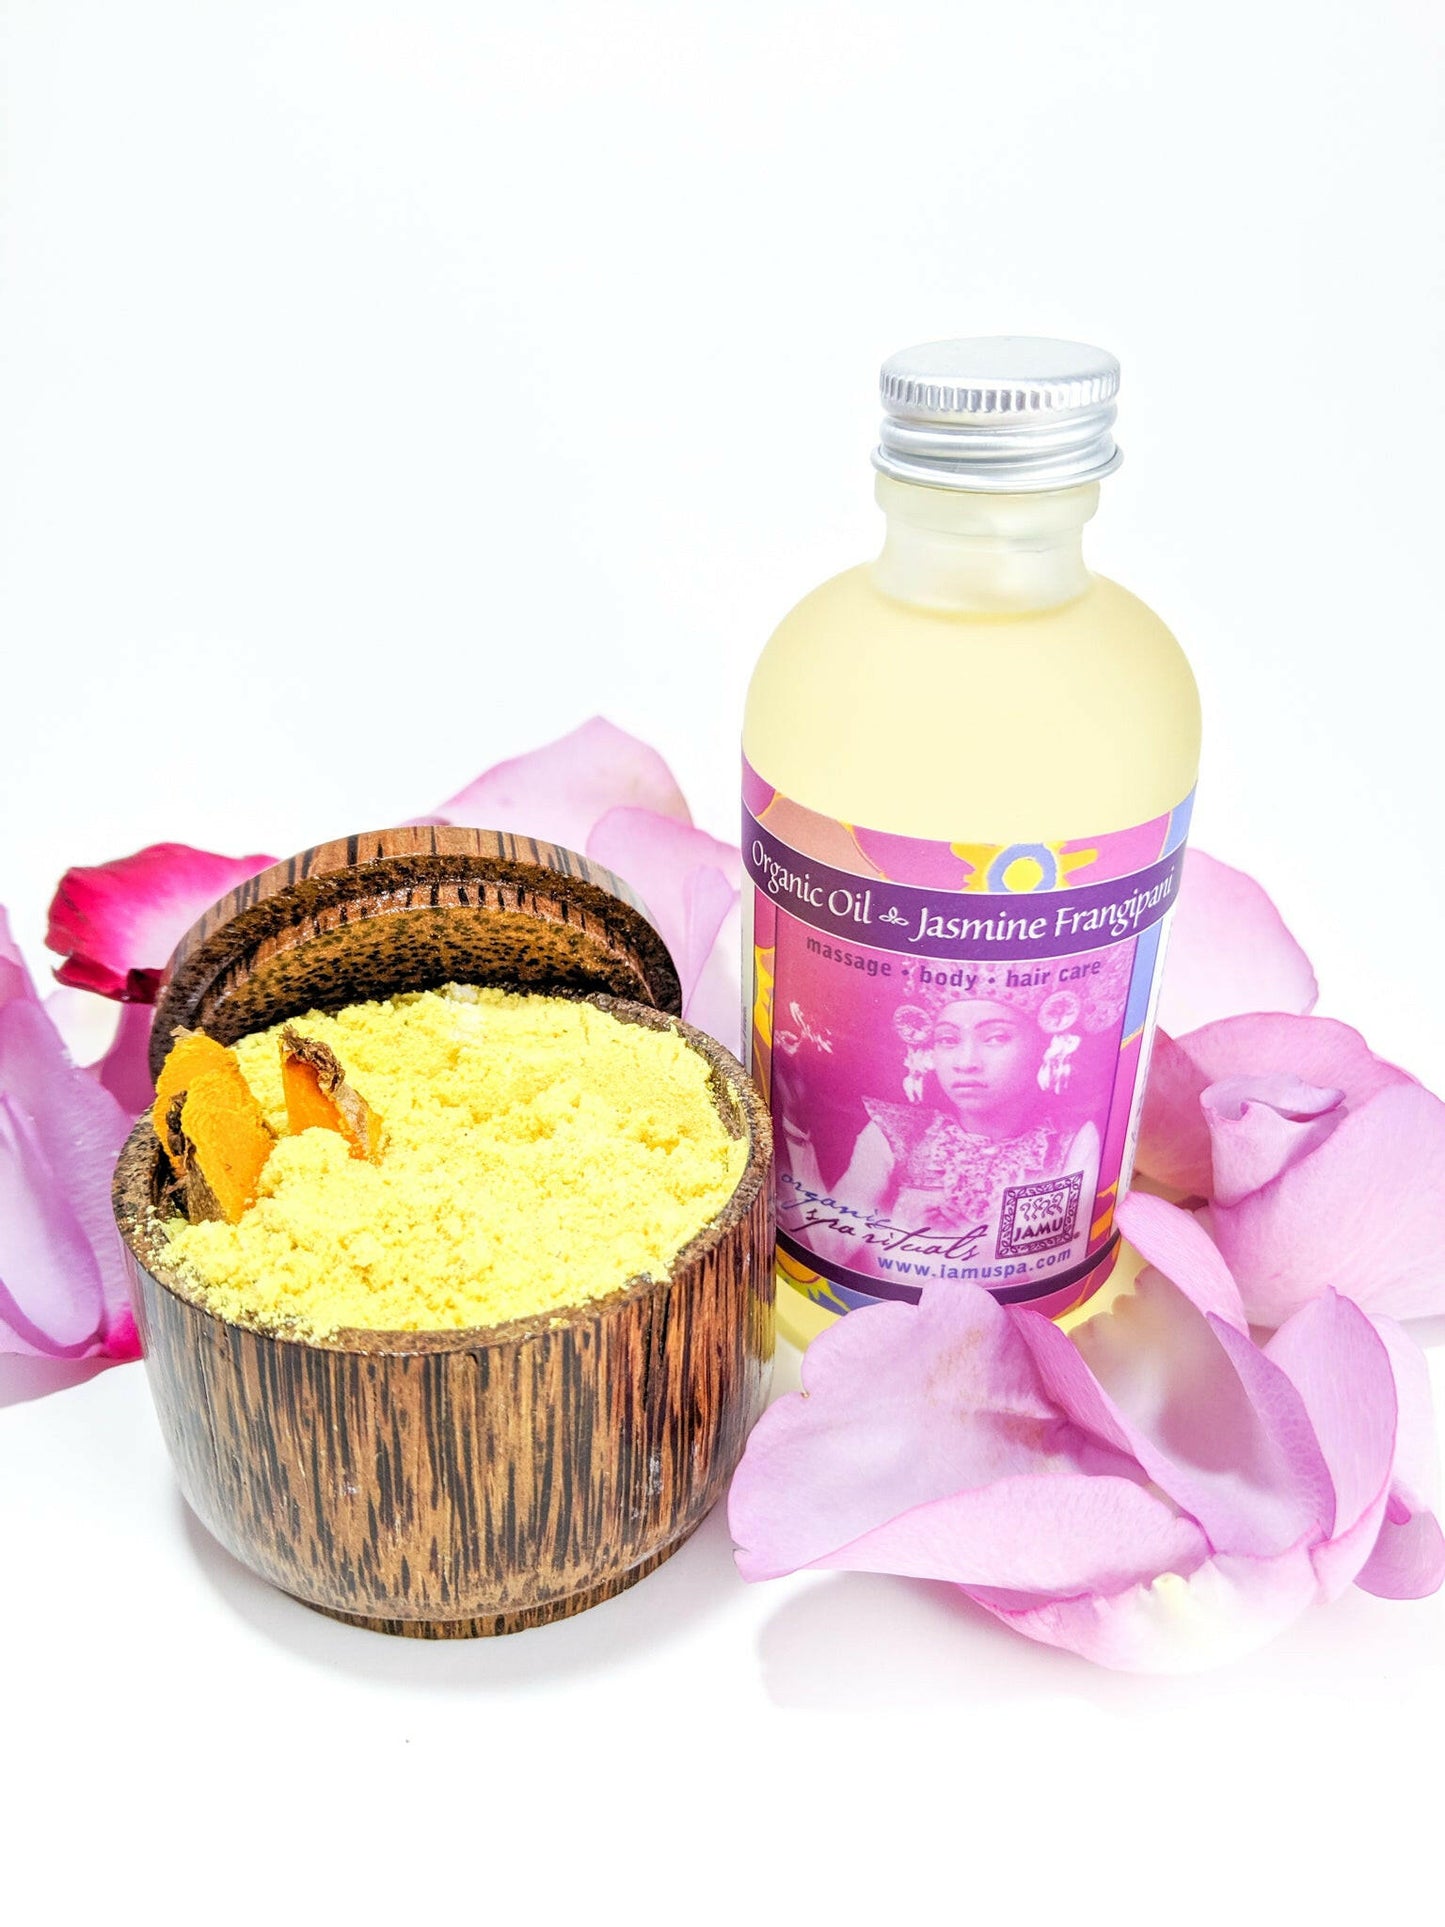 Organic Body, Massage, & Hair Oils - JAMU Organic Spa Rituals - balinese massage, organic body products, health and wellness